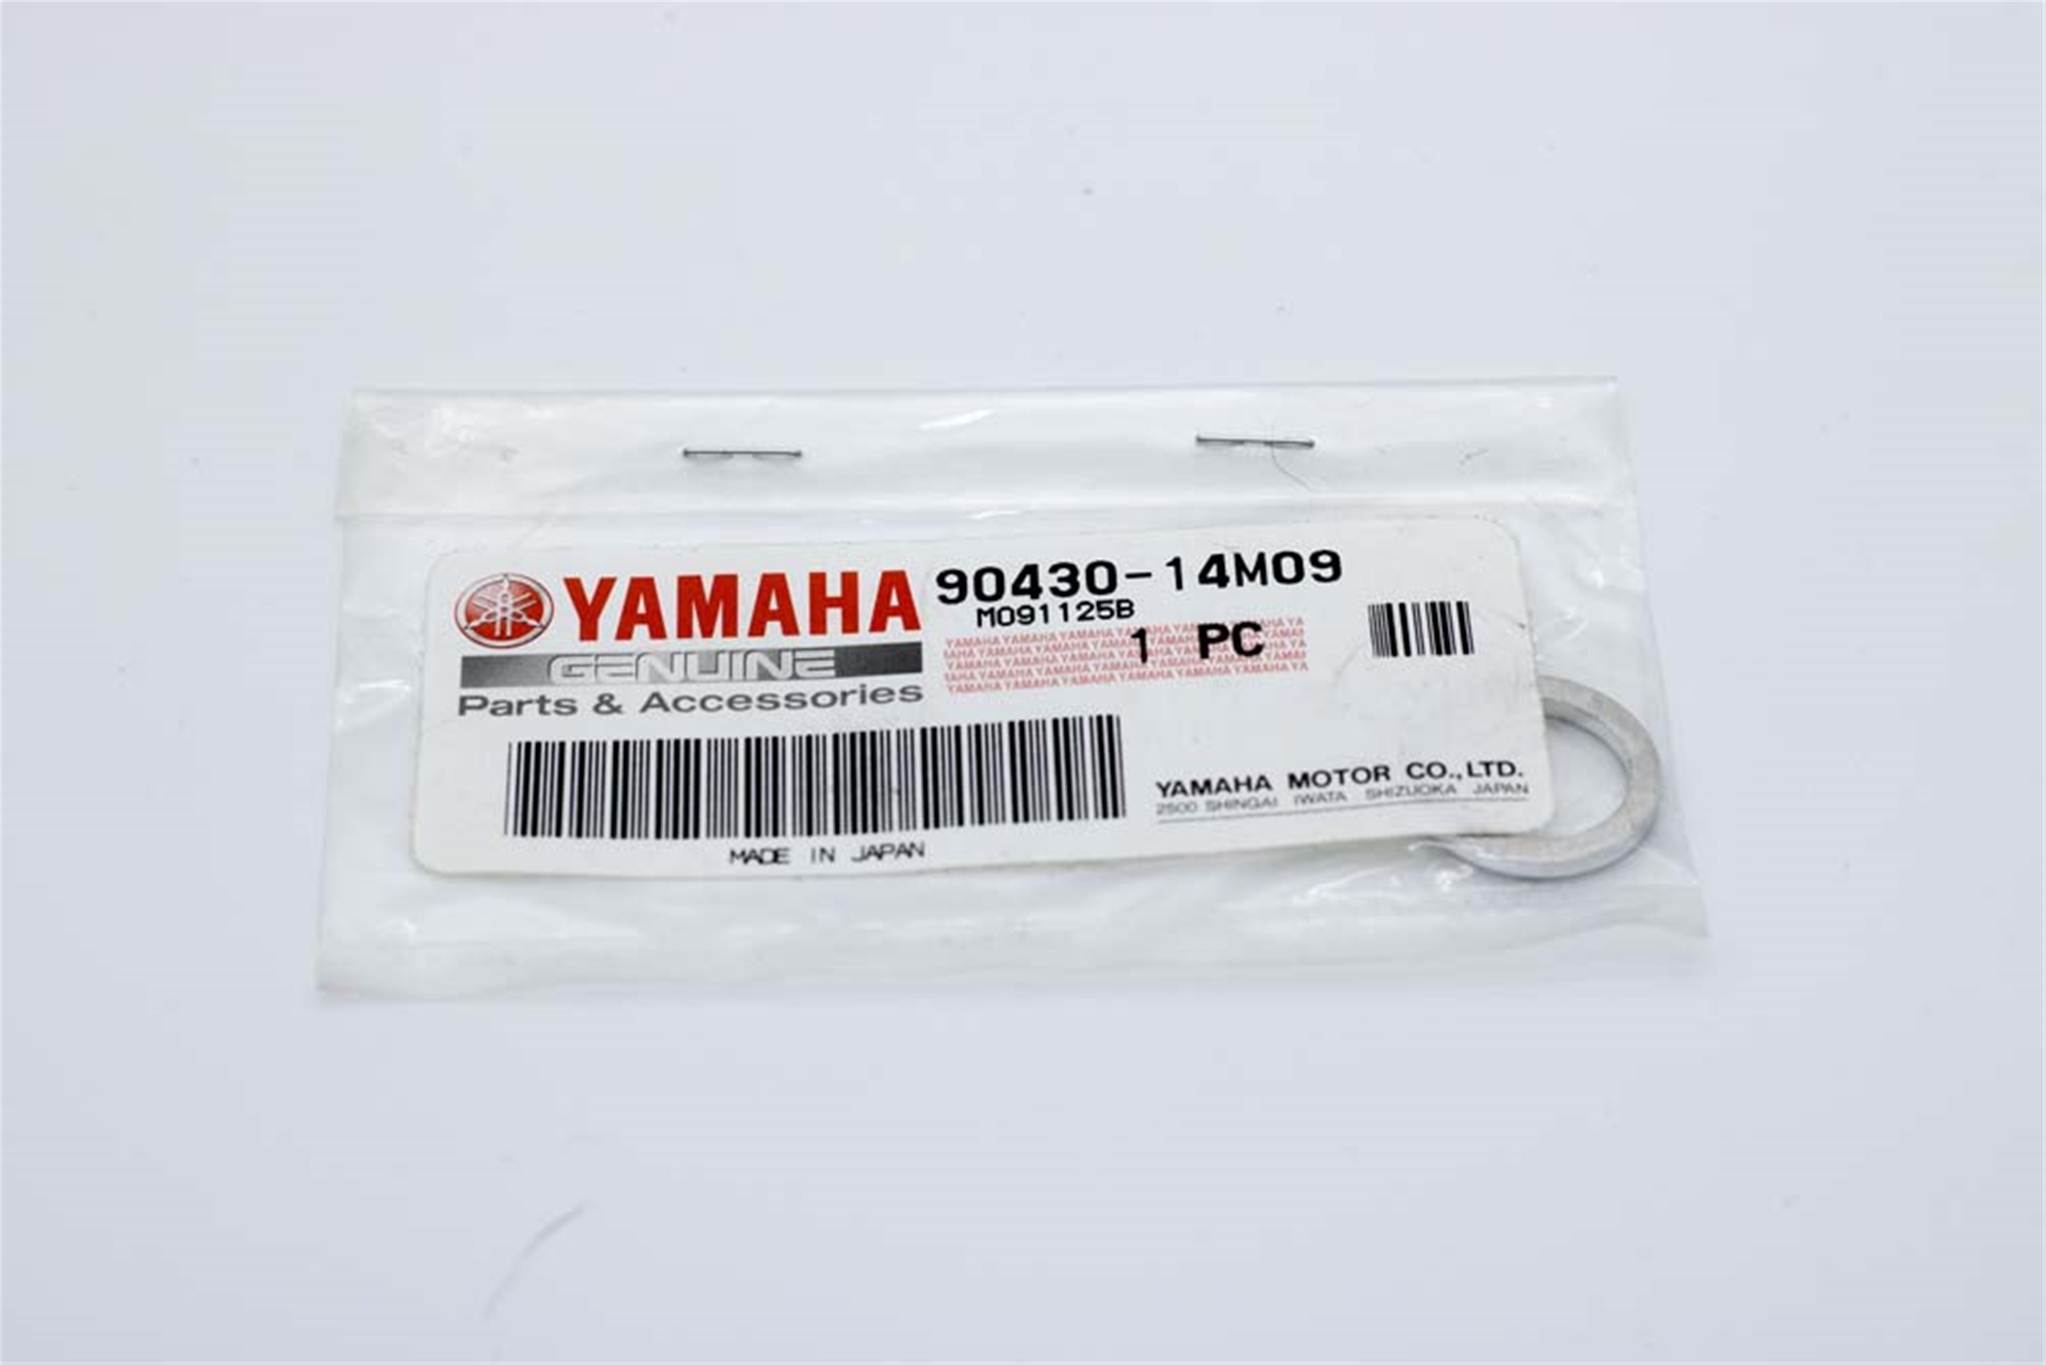 9043014M09 Gasket Yamaha Outboard OEM